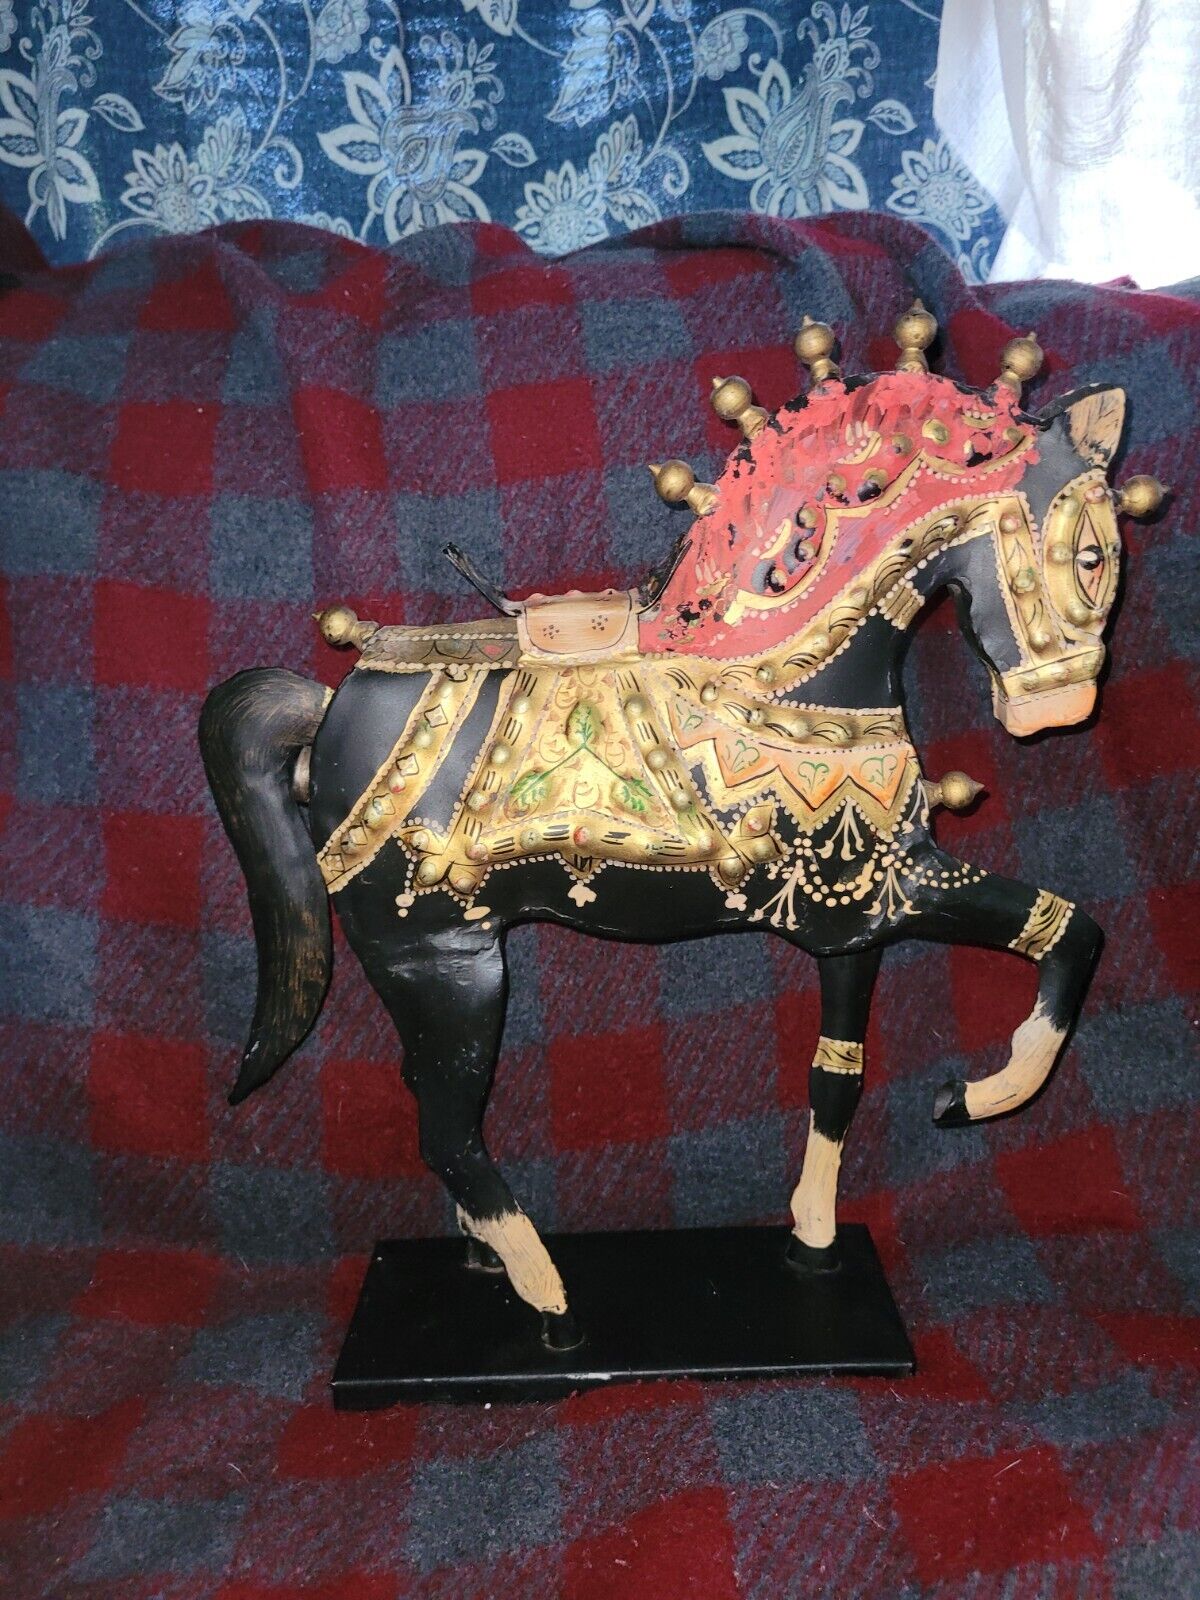 Pier One Metal Decorative Ornate Carousel Horse Figurine Sculpture Made in India